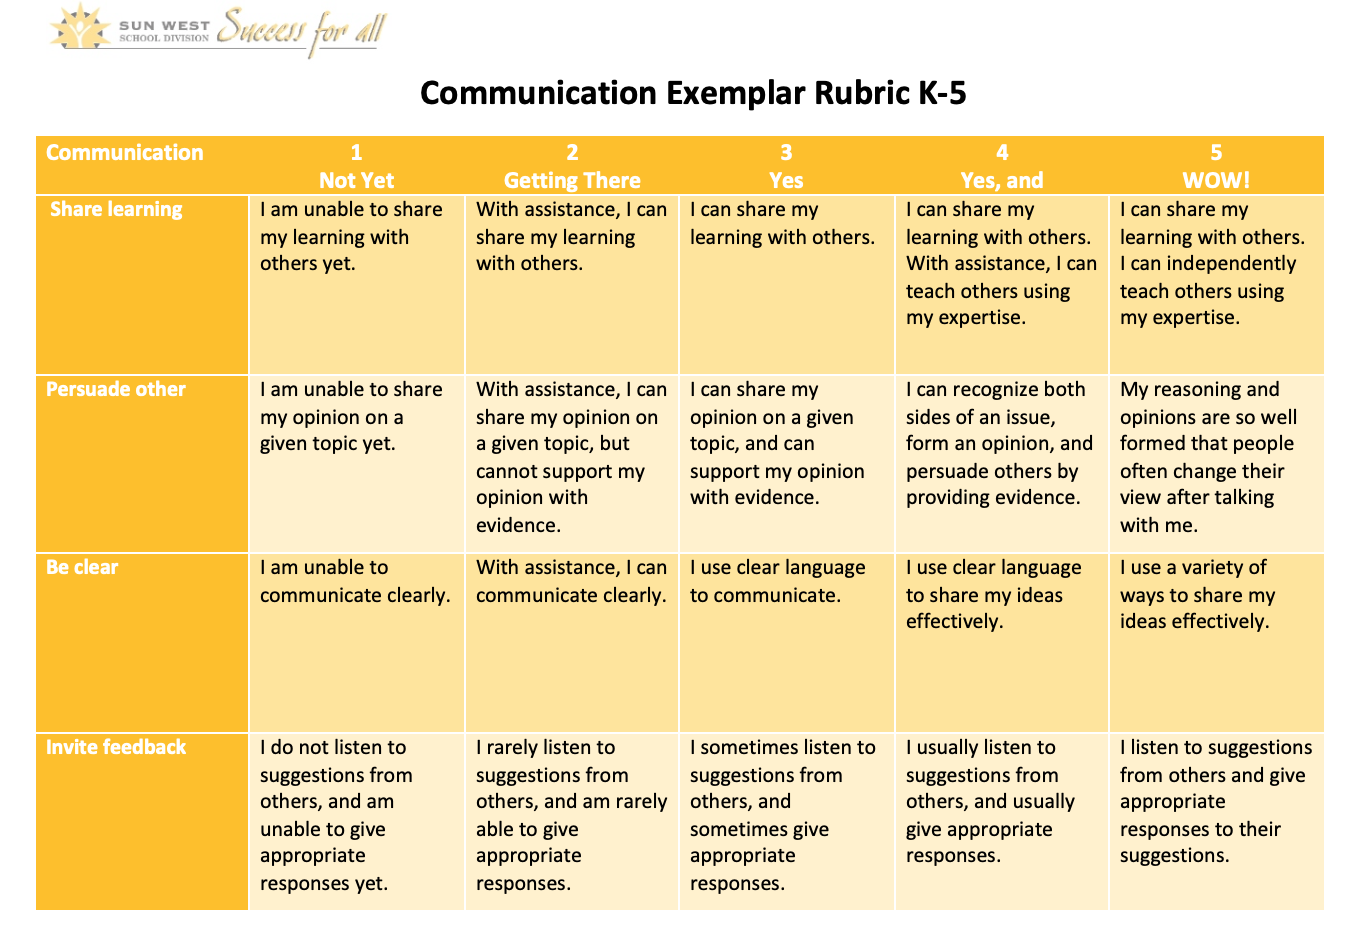 Examplar Rubric for Communication K-5